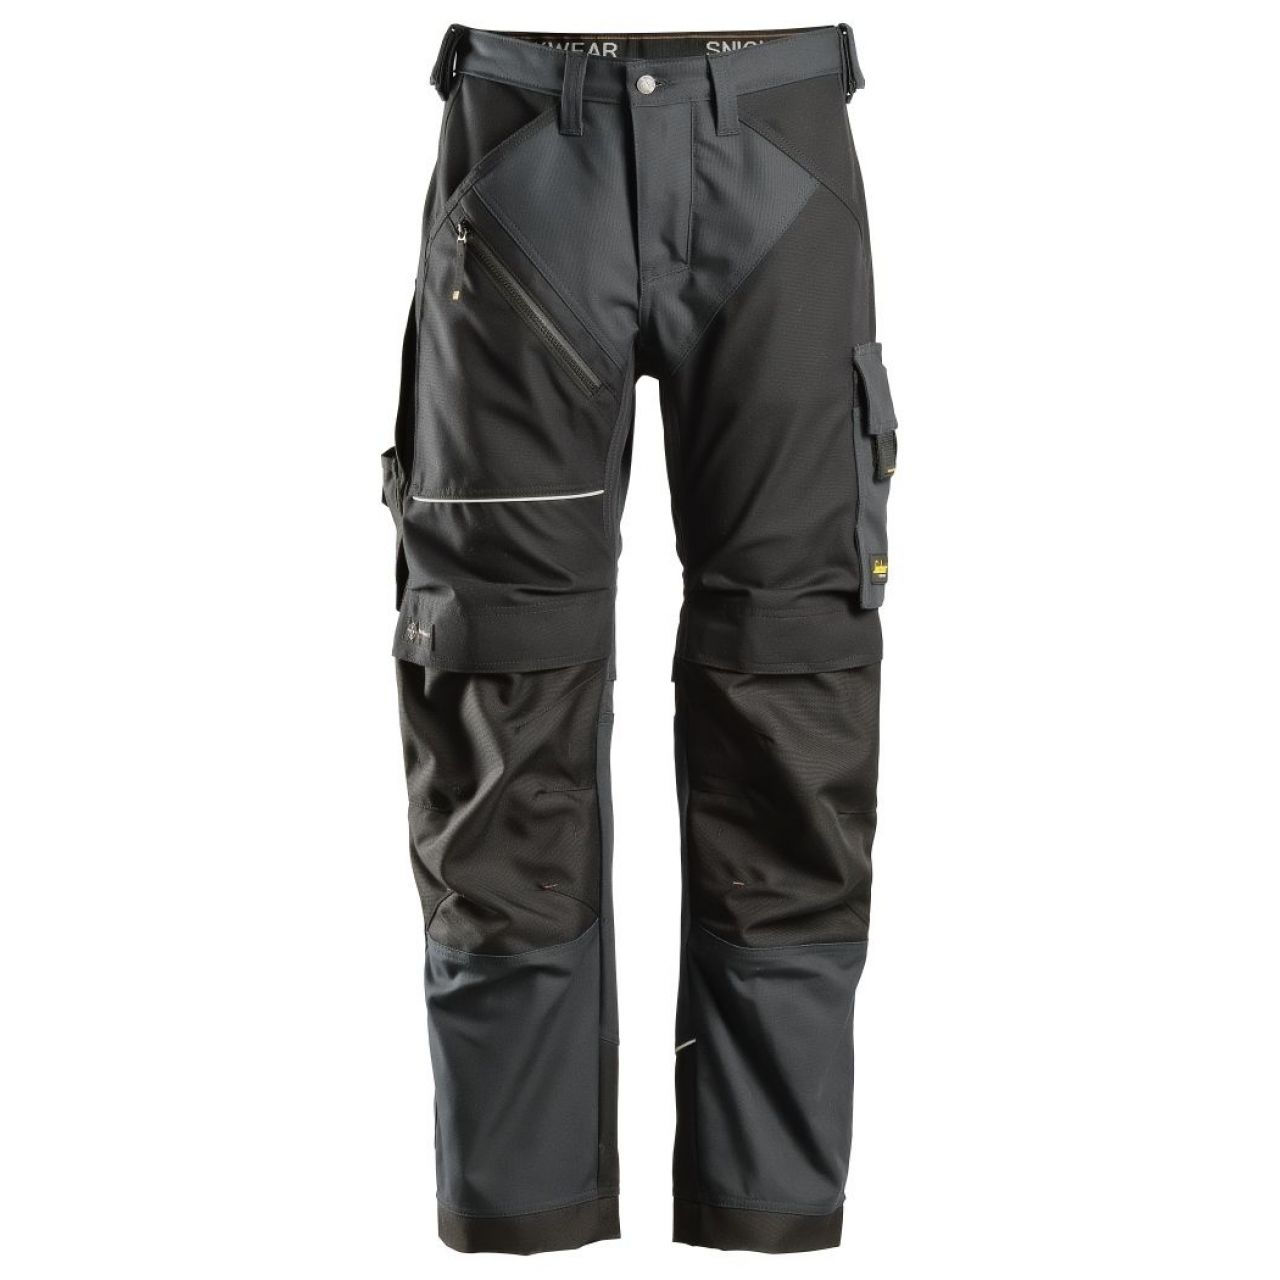 Pantalon Canvas+ RuffWork gris acero-negro talla 148